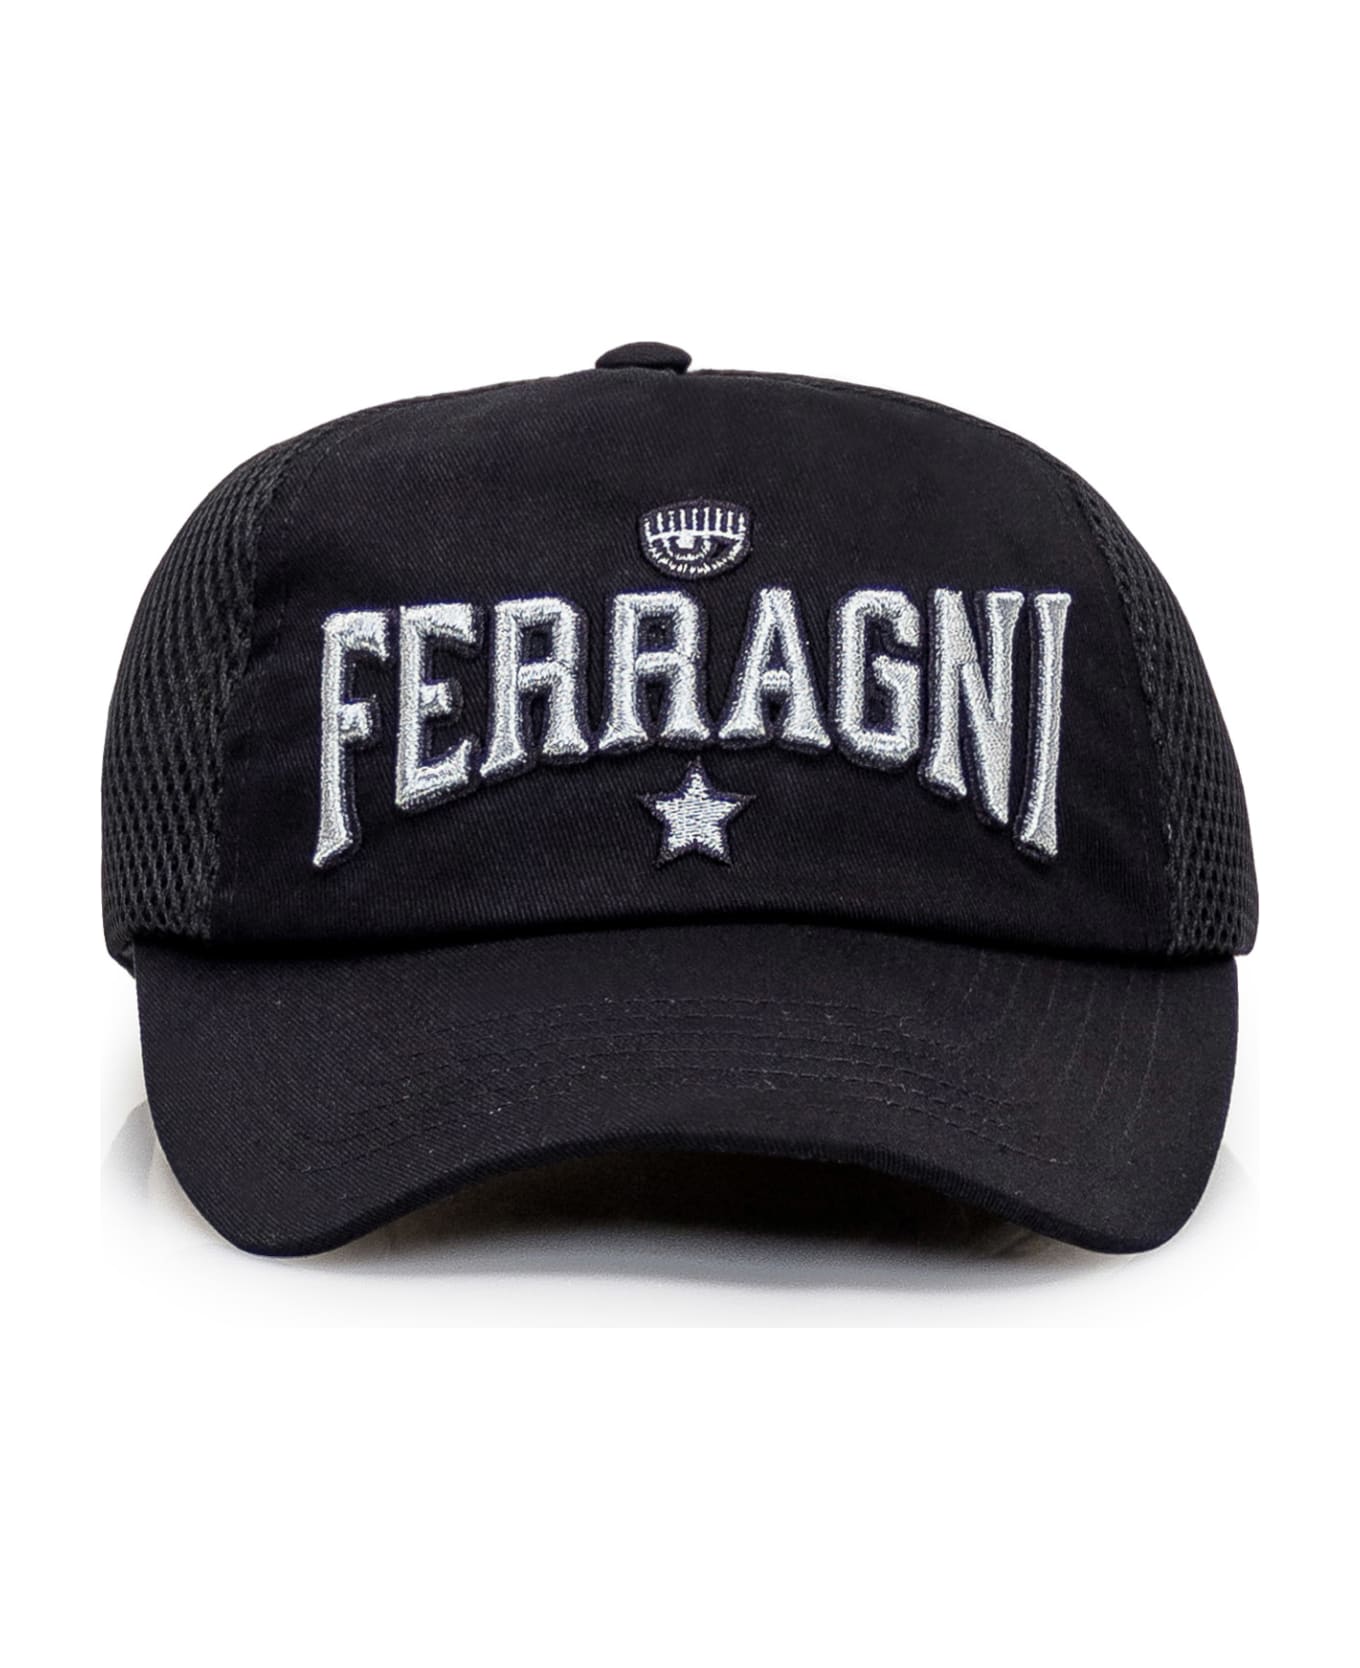 Chiara Ferragni Logo Cap - BLACK 帽子